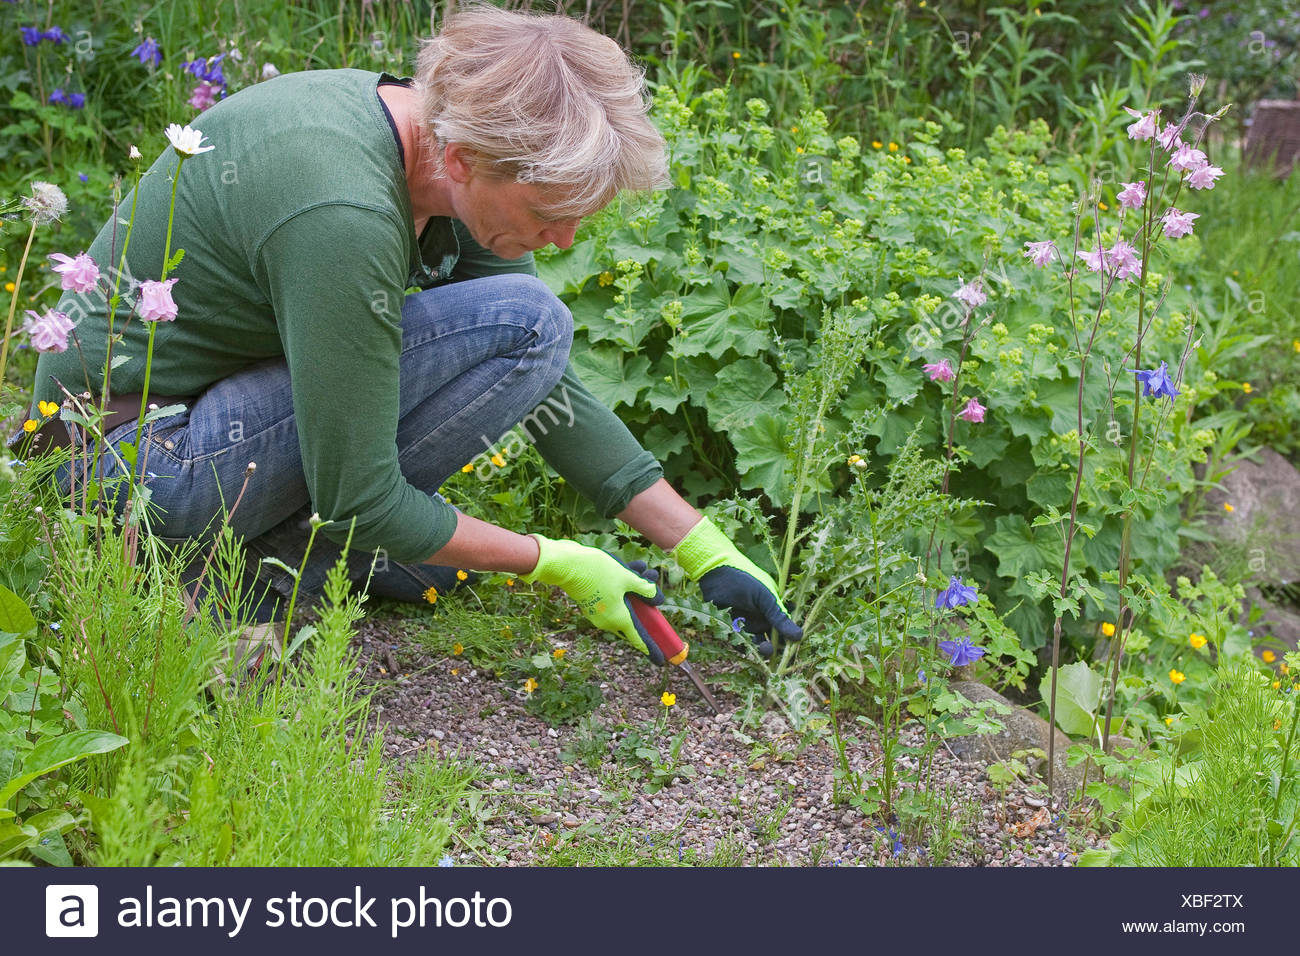 woman weeding the garden, Germany Stock Photo - Alamy